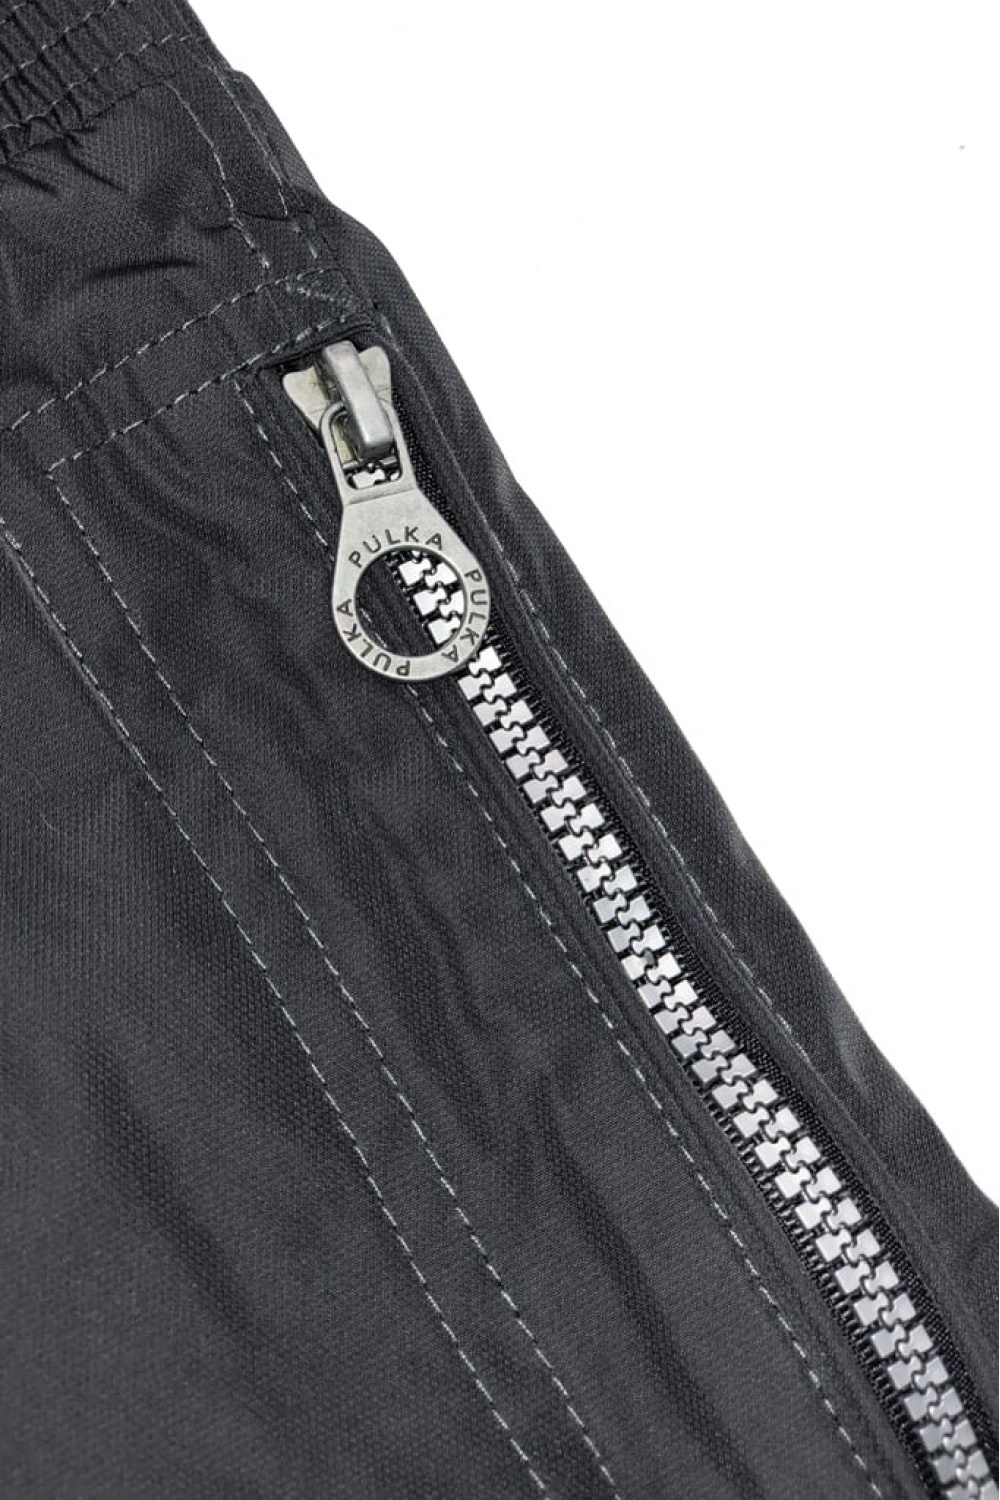 Утепленные брюки на флисе (PUFWB-916-10920-805) Silver Spoon